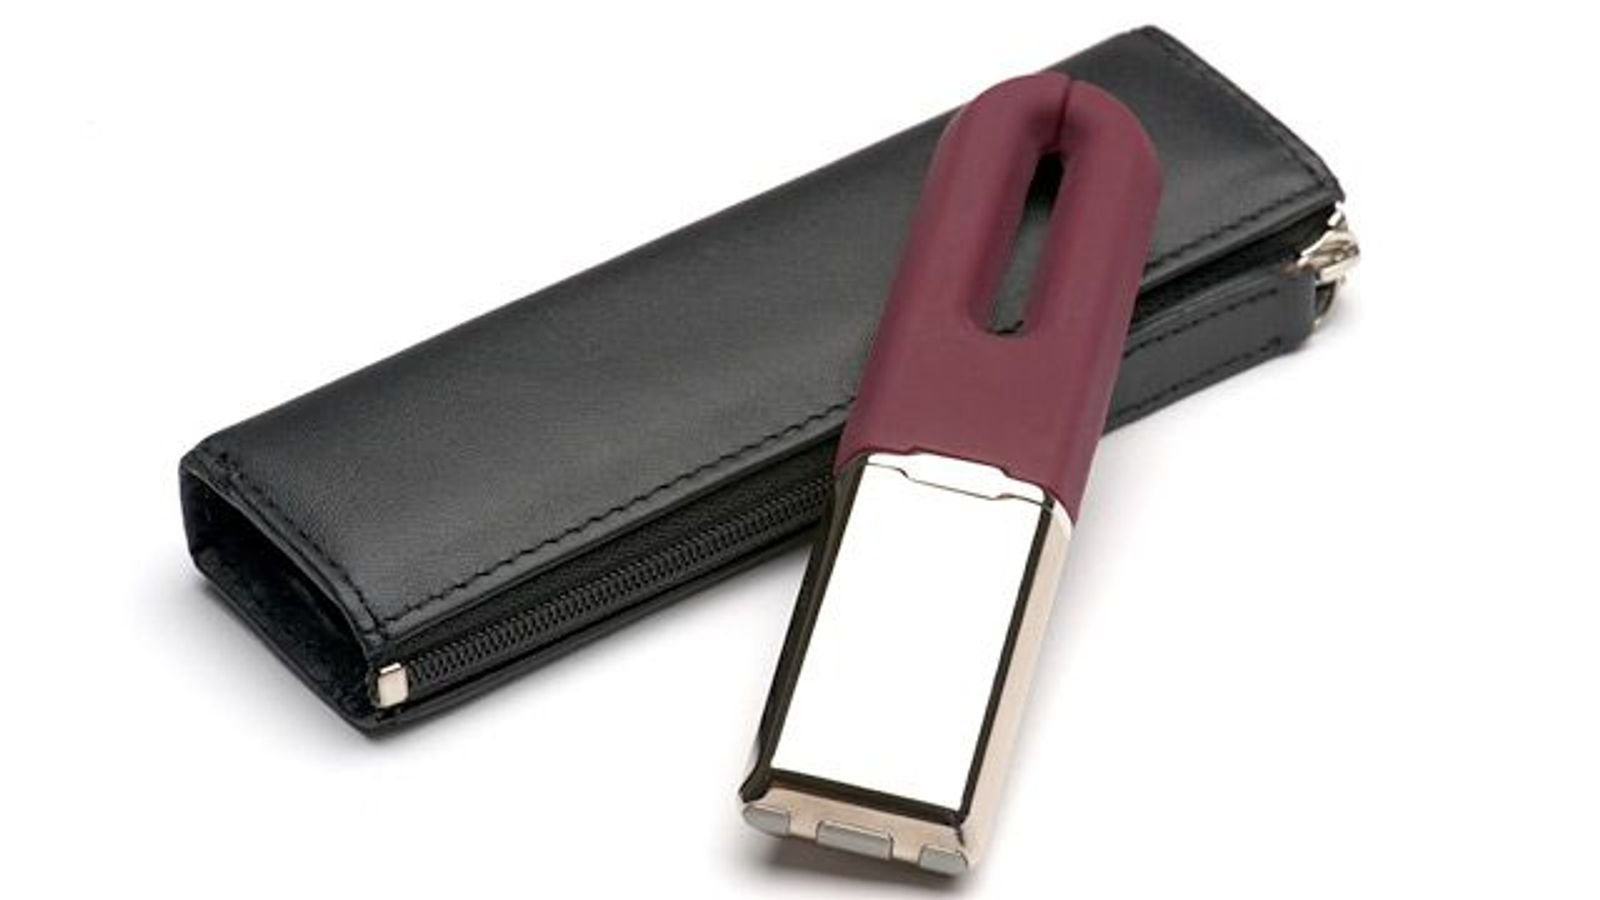 Entrenue Brings Crave Duet USB-Capable Vibrator to Market